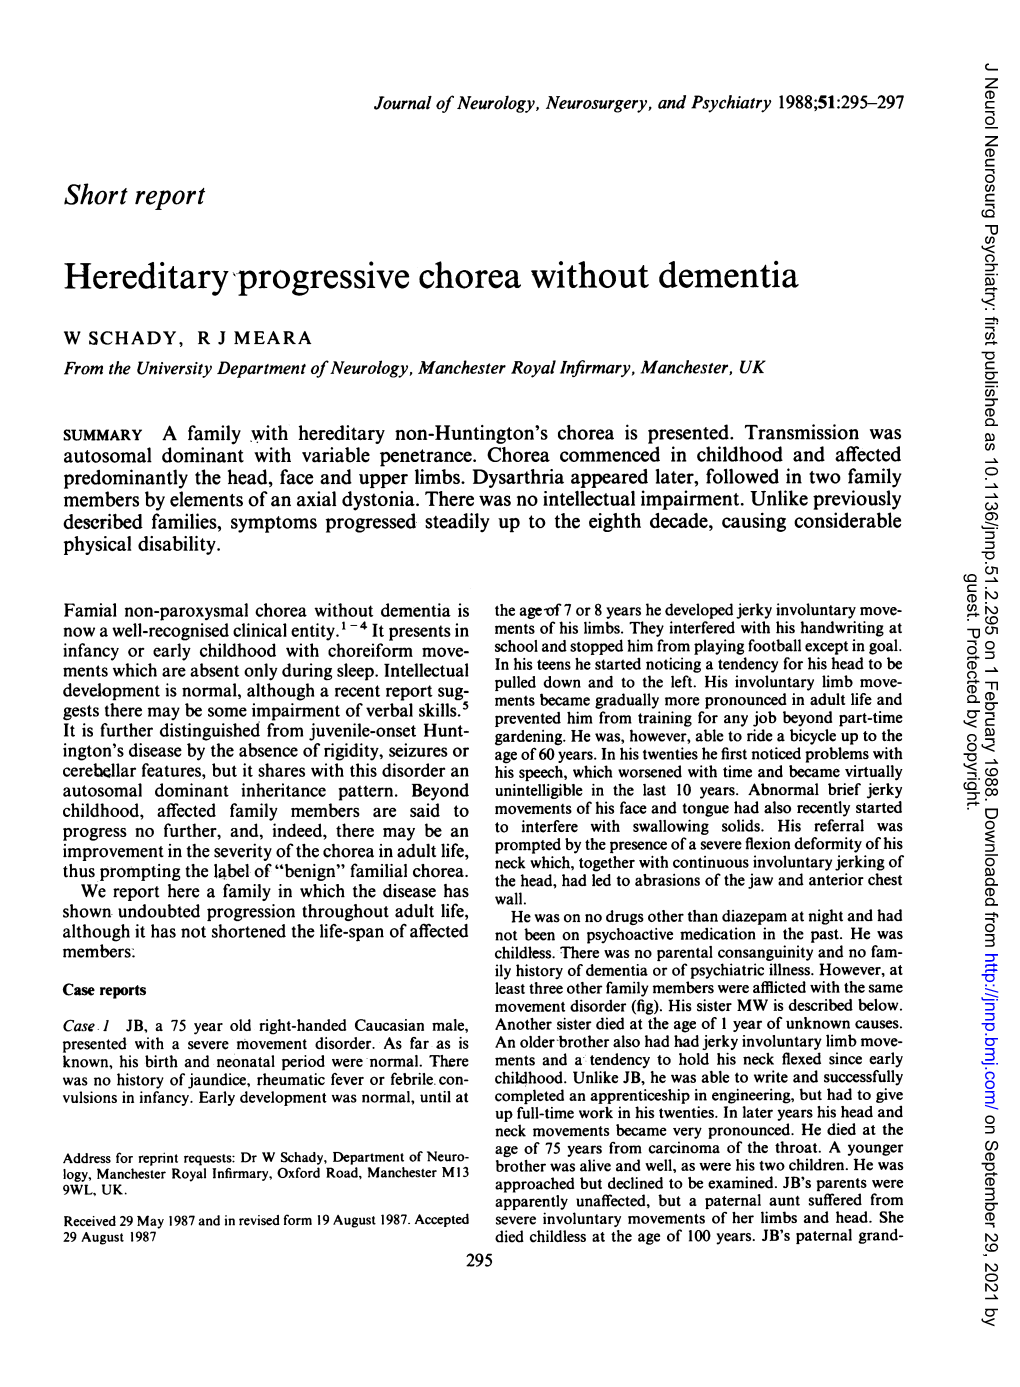 Hereditary Progressive Chorea Without Dementia